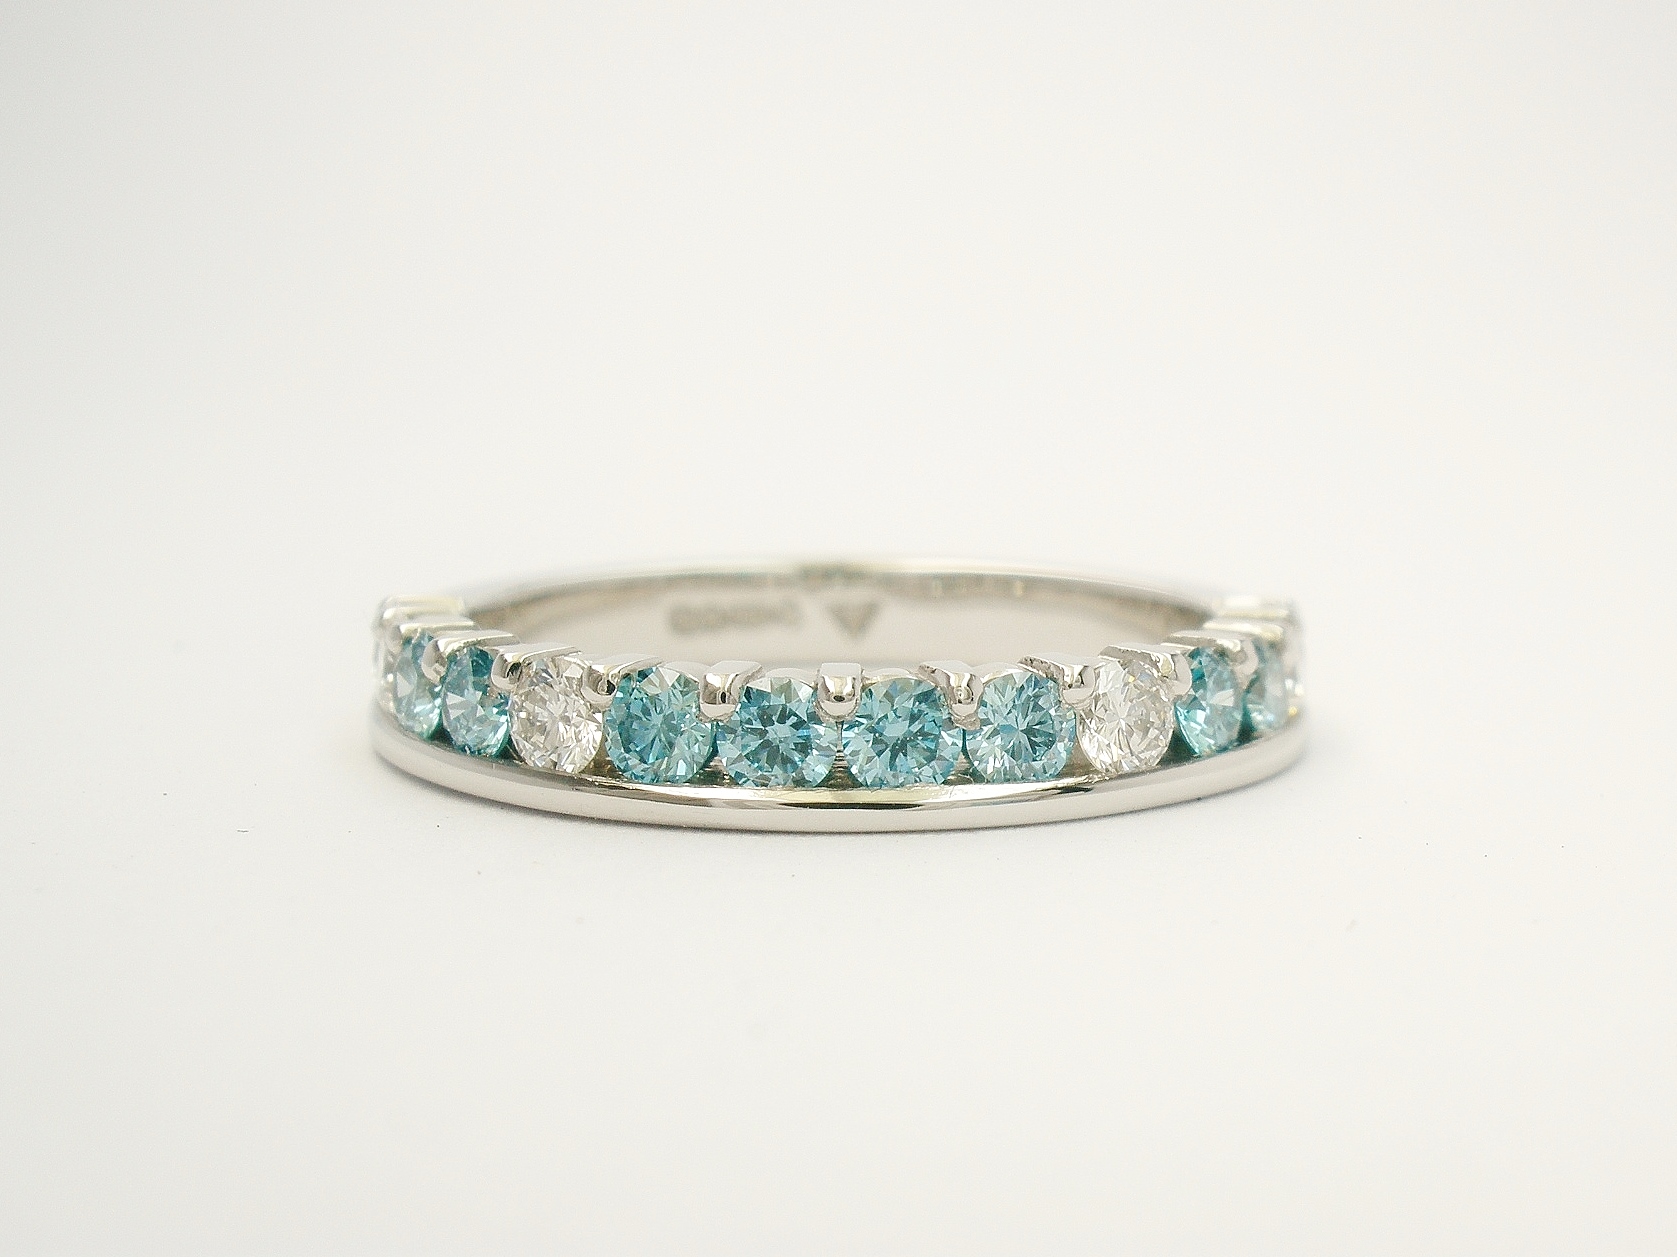 Platinum part channel set round brilliant cut sky blue diamond & white diamond wedding ring set to 55% cover.